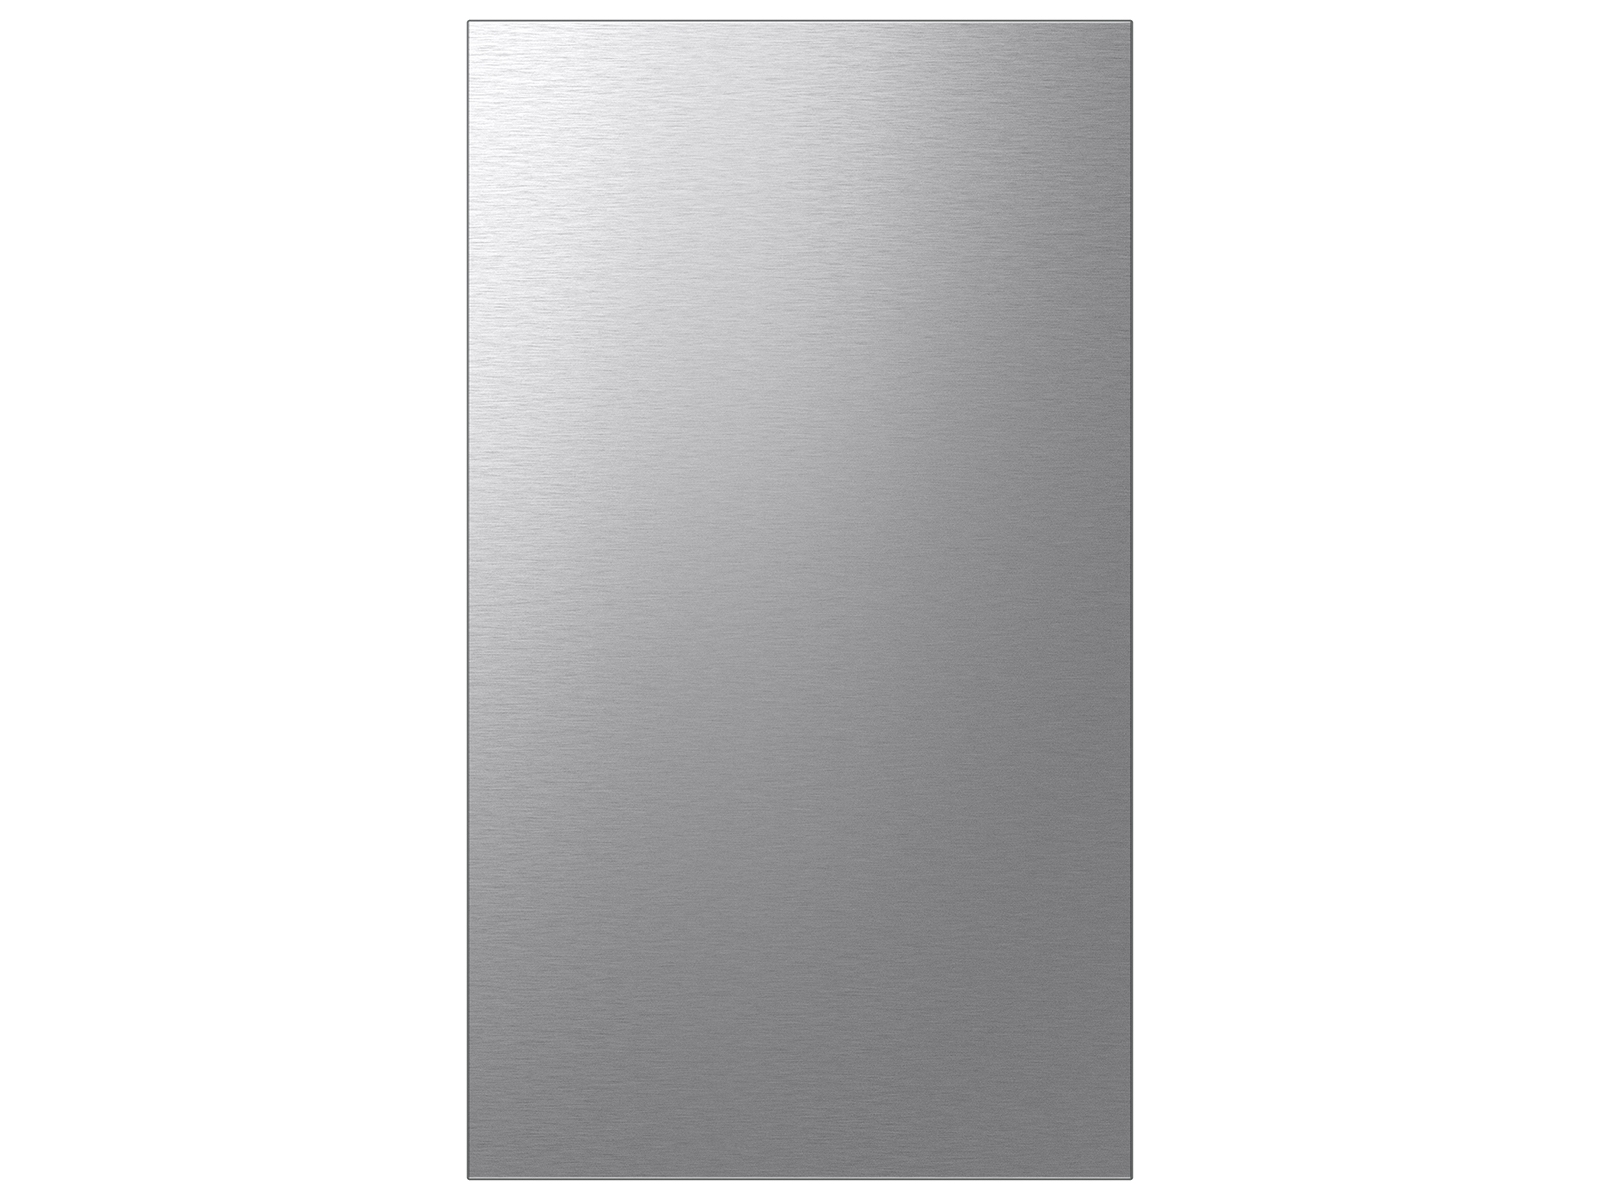 Thumbnail image of Bespoke 4-Door Flex&trade; Refrigerator Panel in Stainless Steel - Bottom Panel